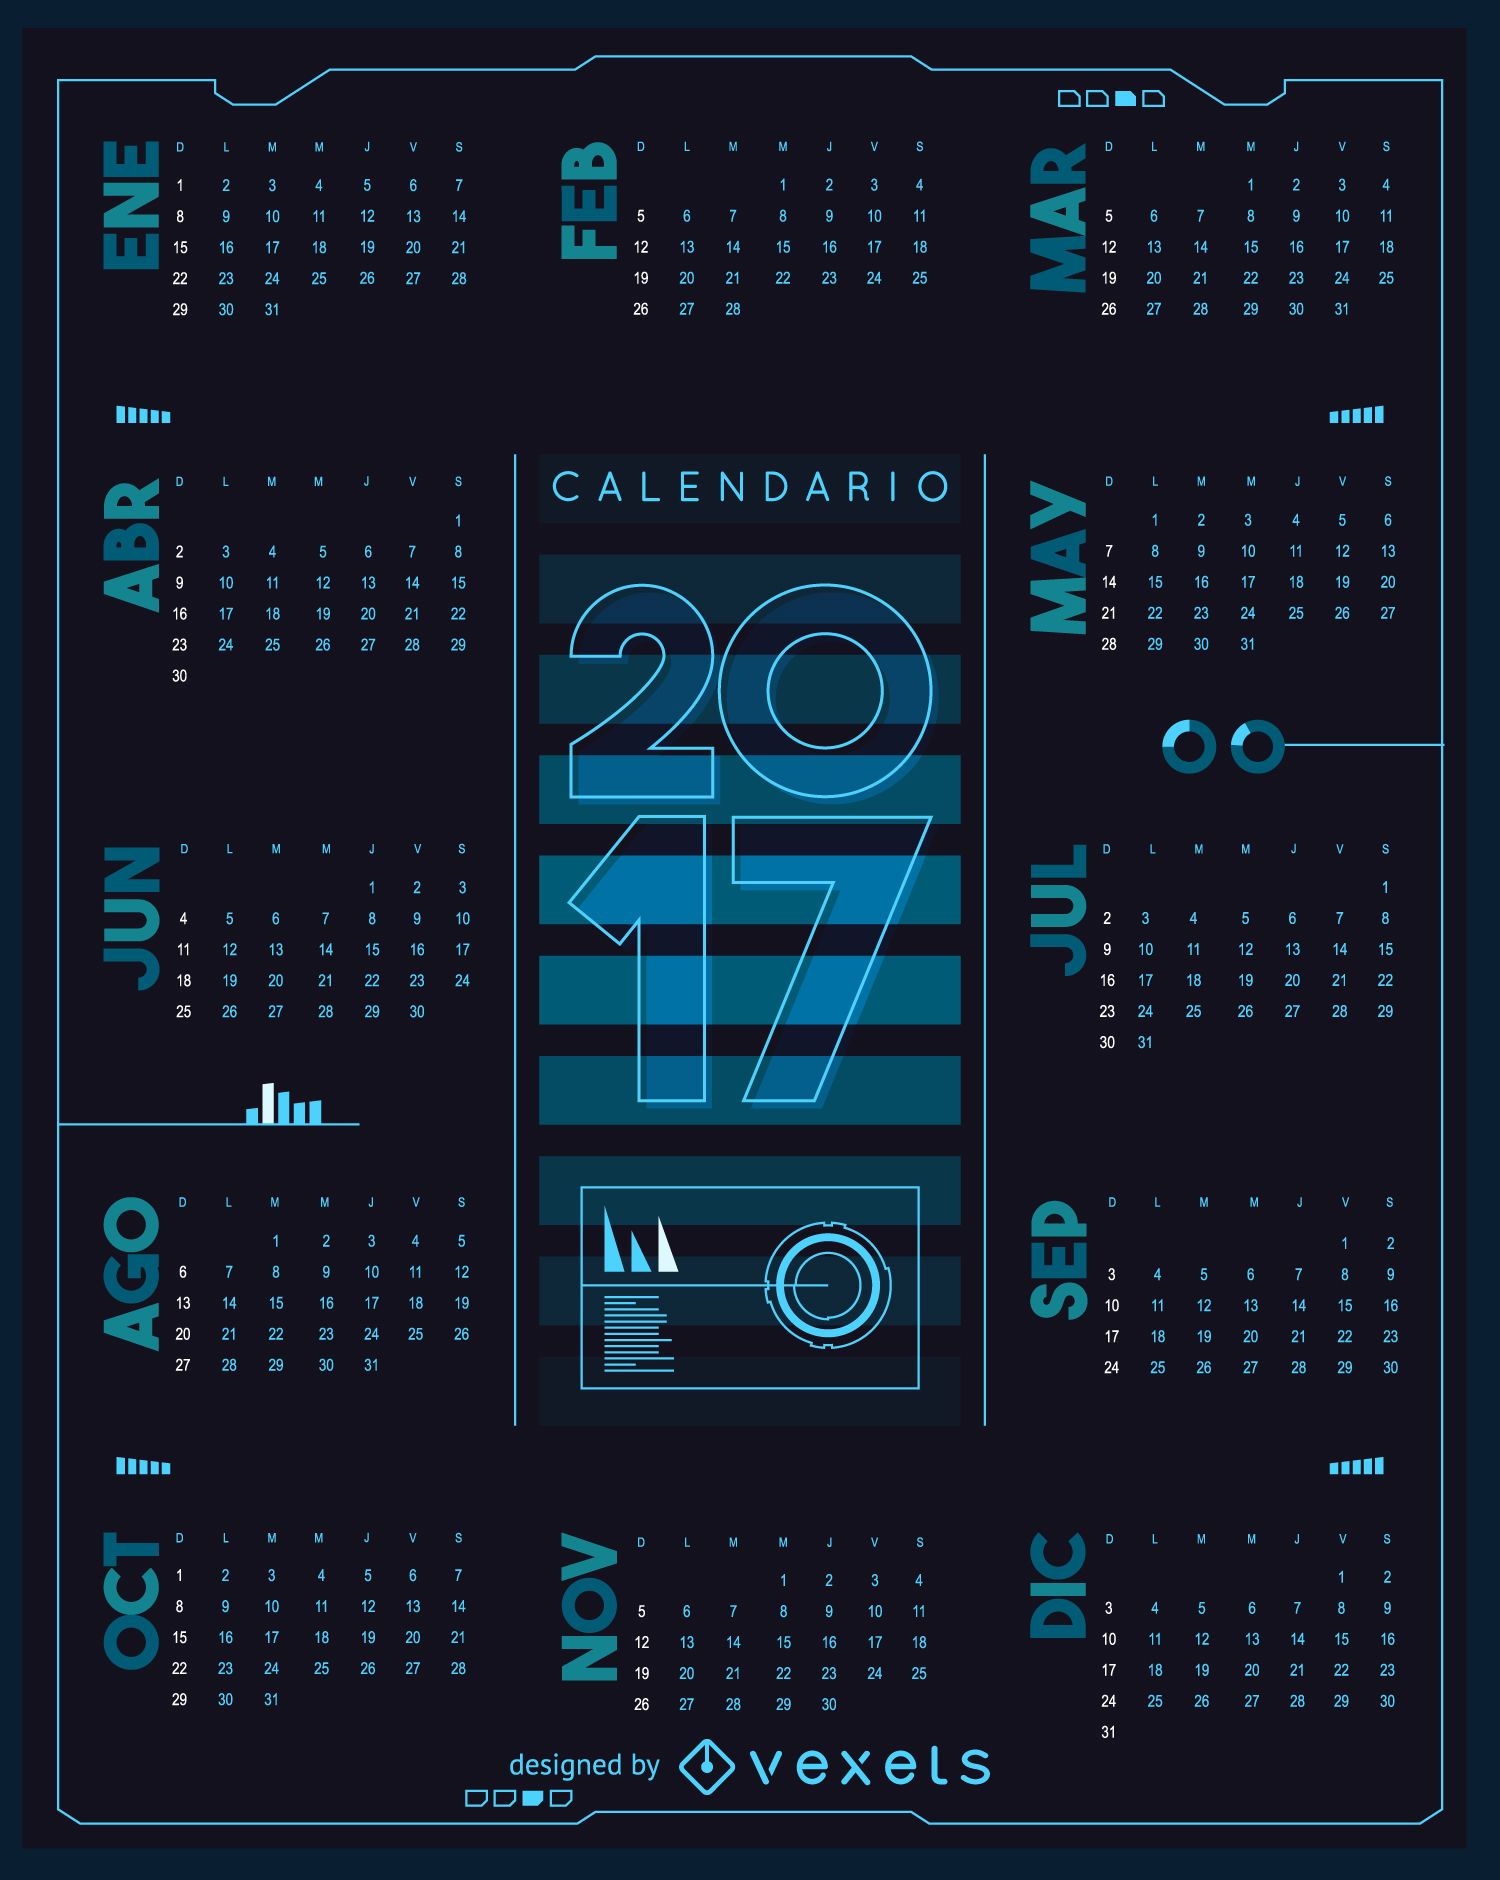 Calendario futurista 2017 en espa?ol